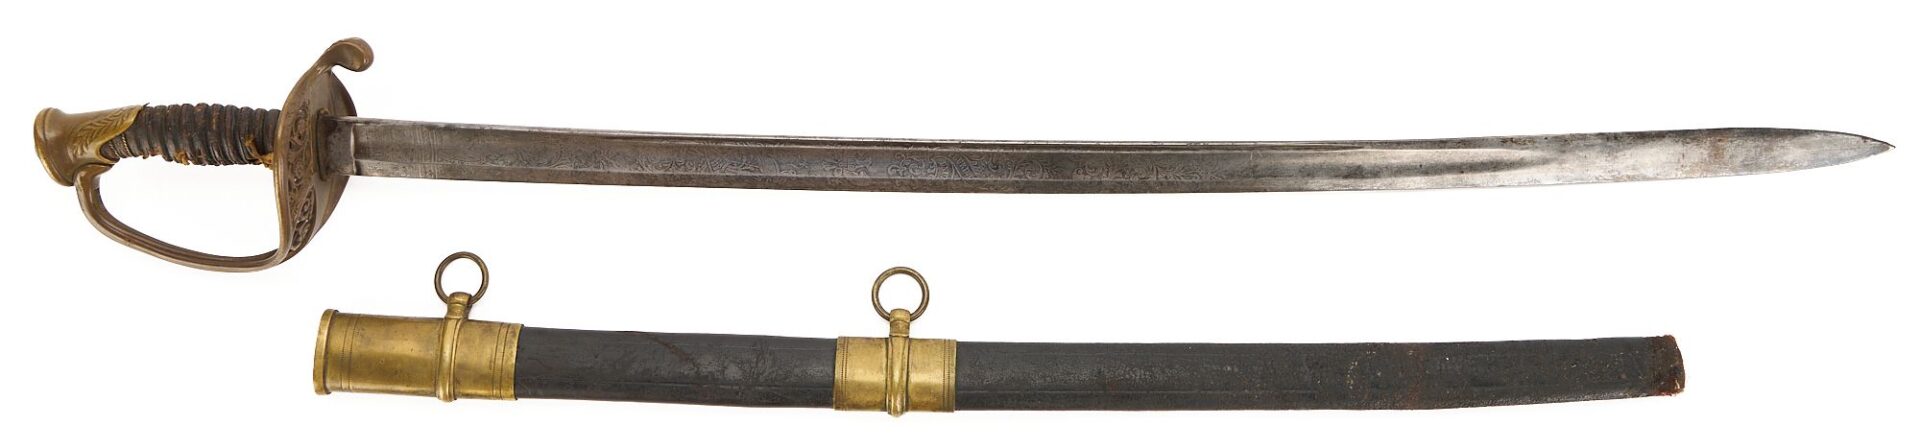 Lot 553: 2 Civil War Era Swords incl. USMC & Naval Cutlass